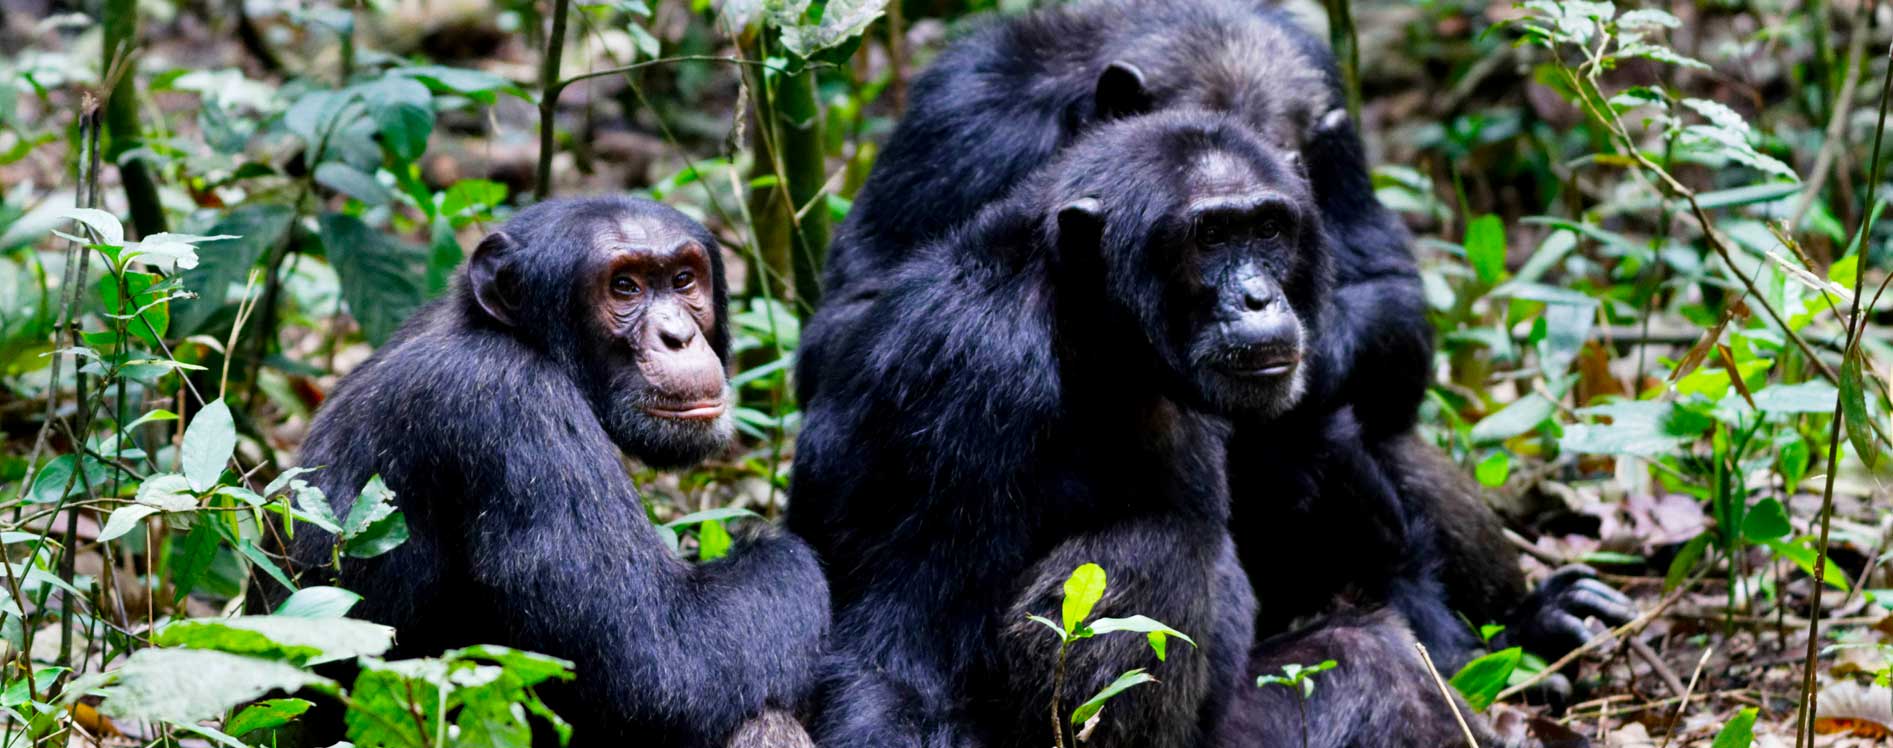 chimpanzee-tracking-experience-in-uganda